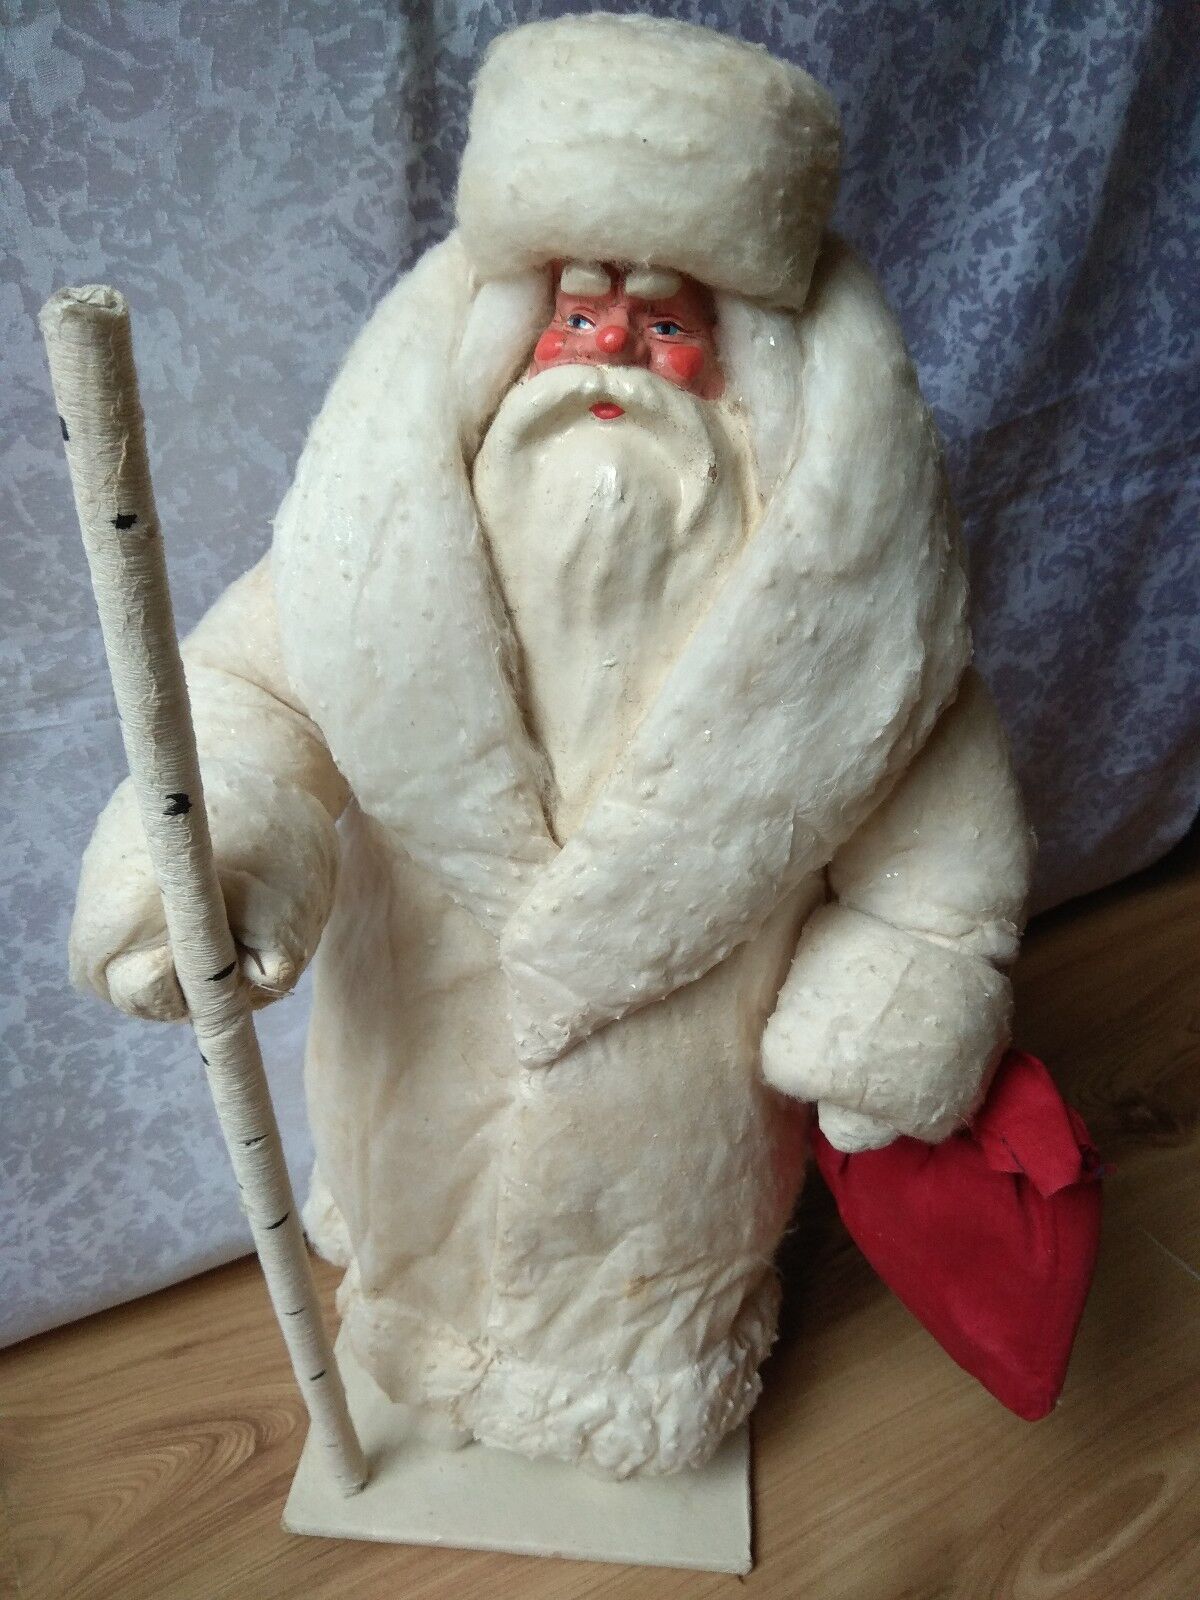 RARE USSR VINTAGE 1966 Soviet RUSSIA doll LARGE toy Santa Claus Christmas Figur Najnowsza praca, prawdziwa gwarancja